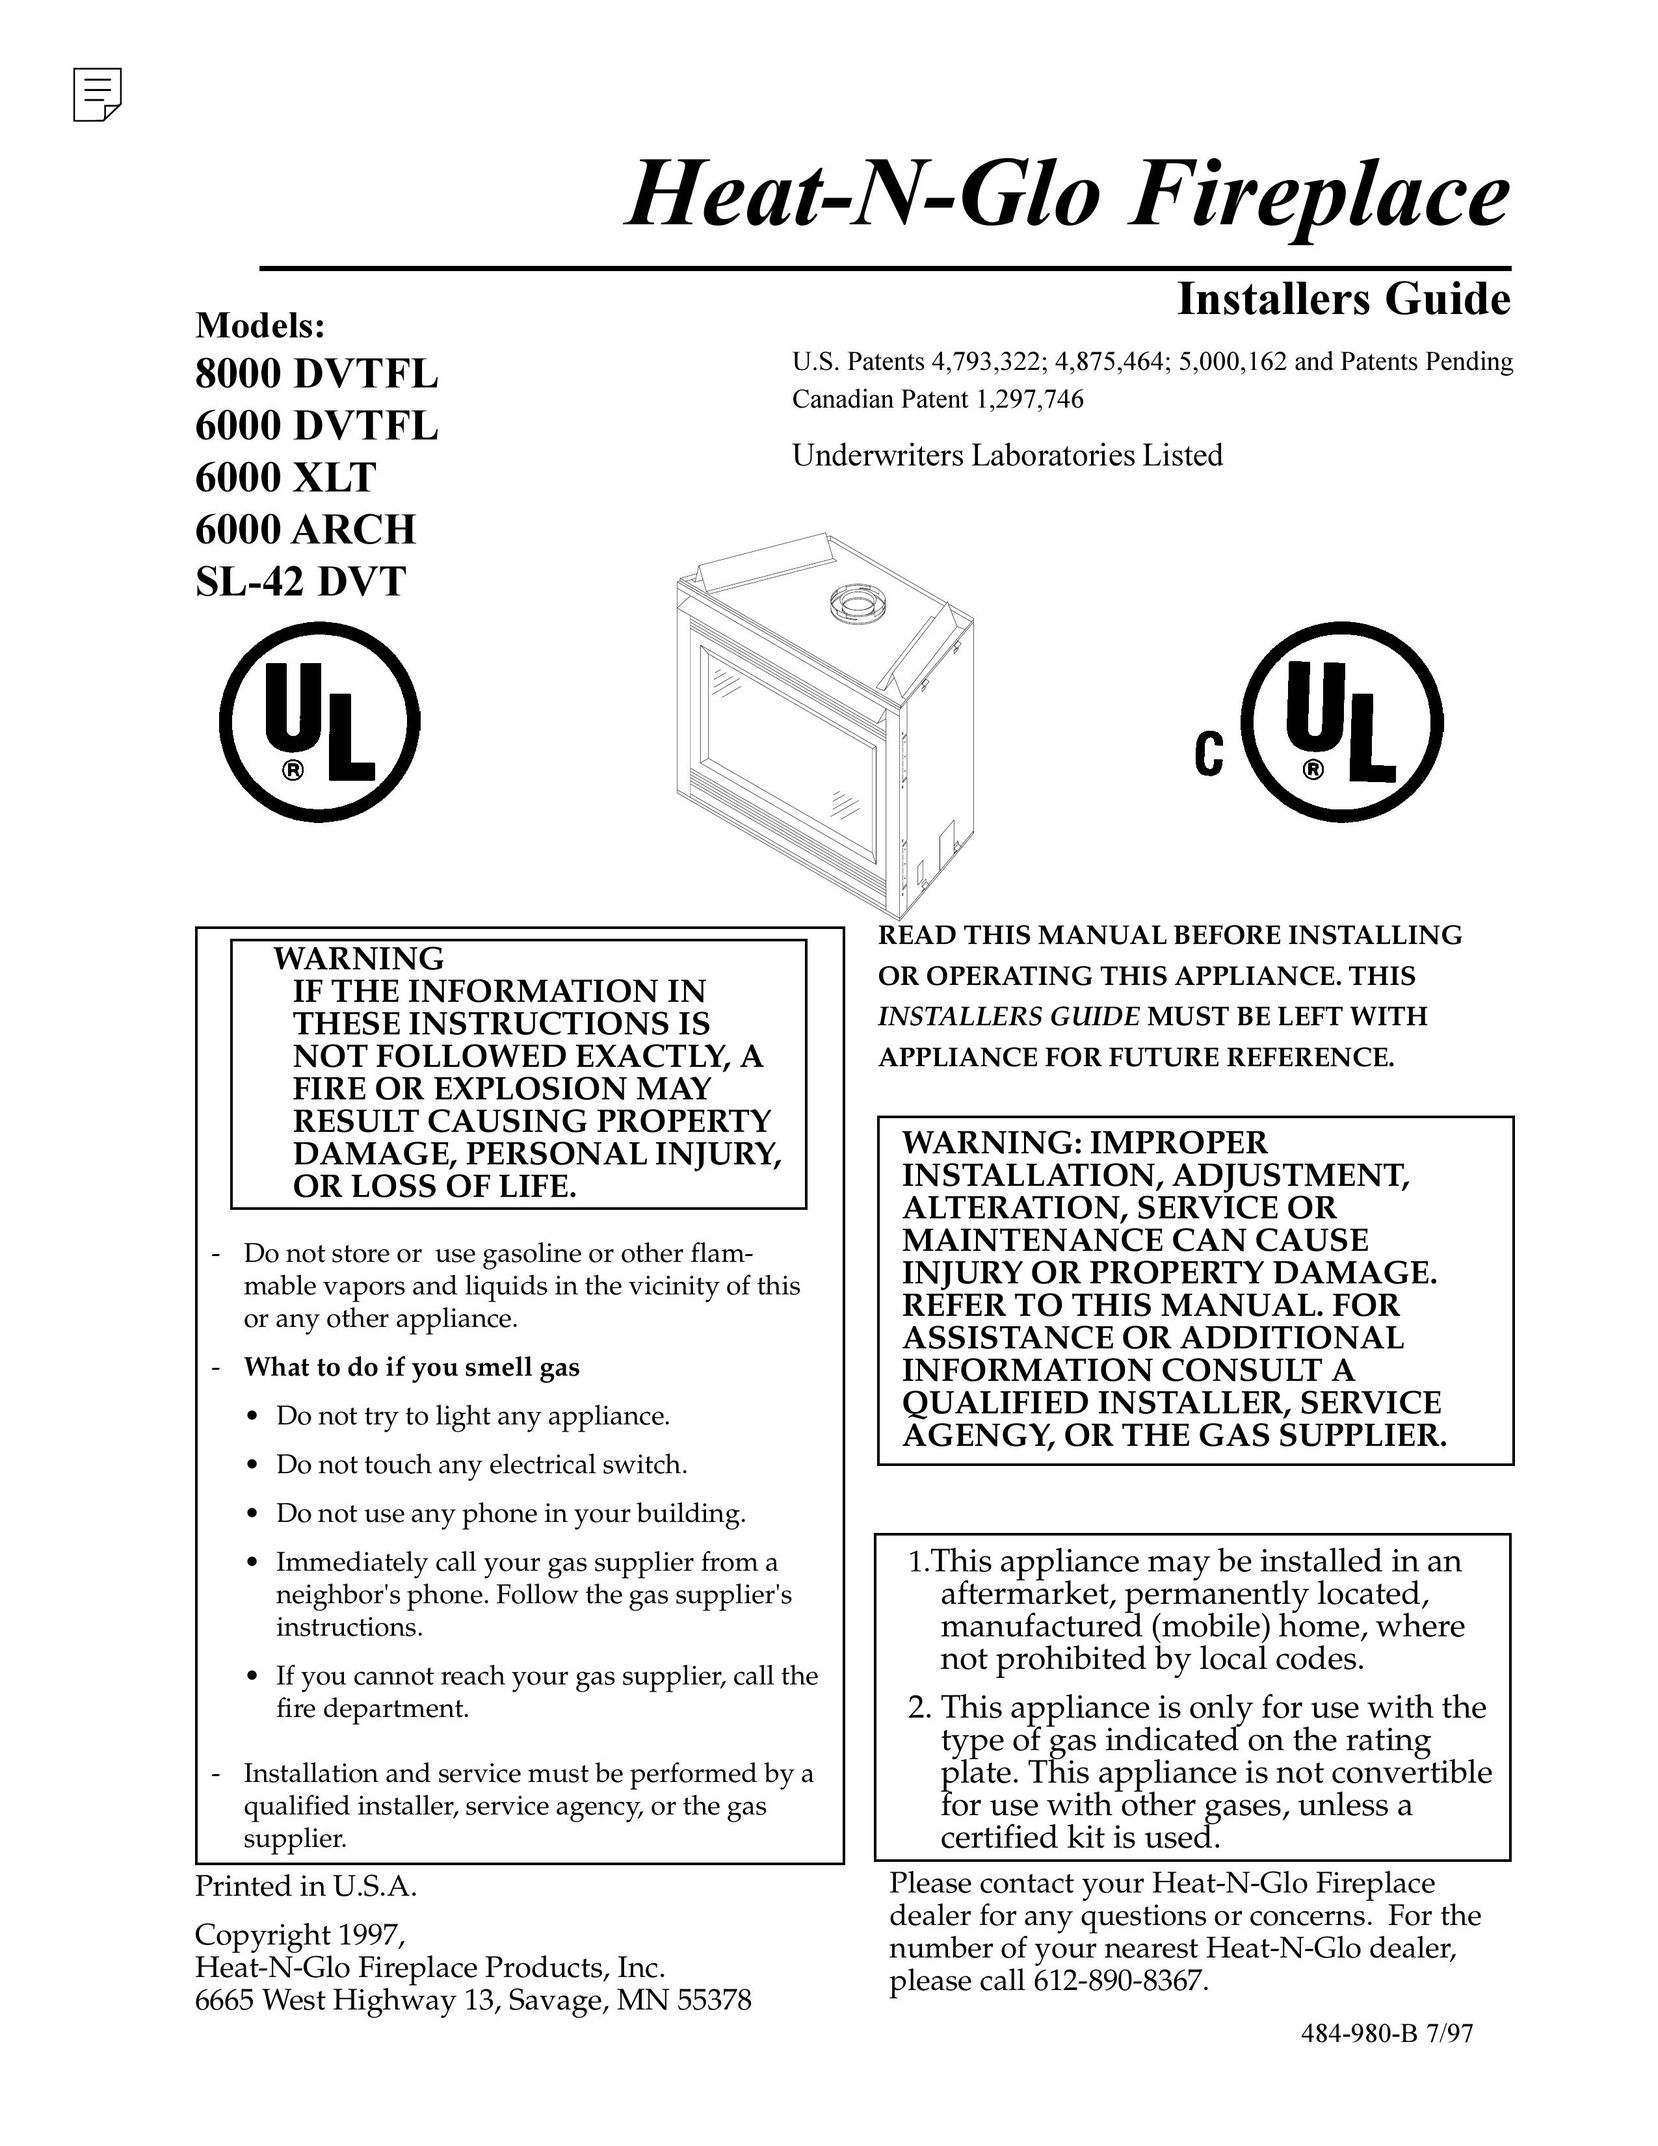 Heat & Glo LifeStyle 8000 DVTFL Indoor Fireplace User Manual